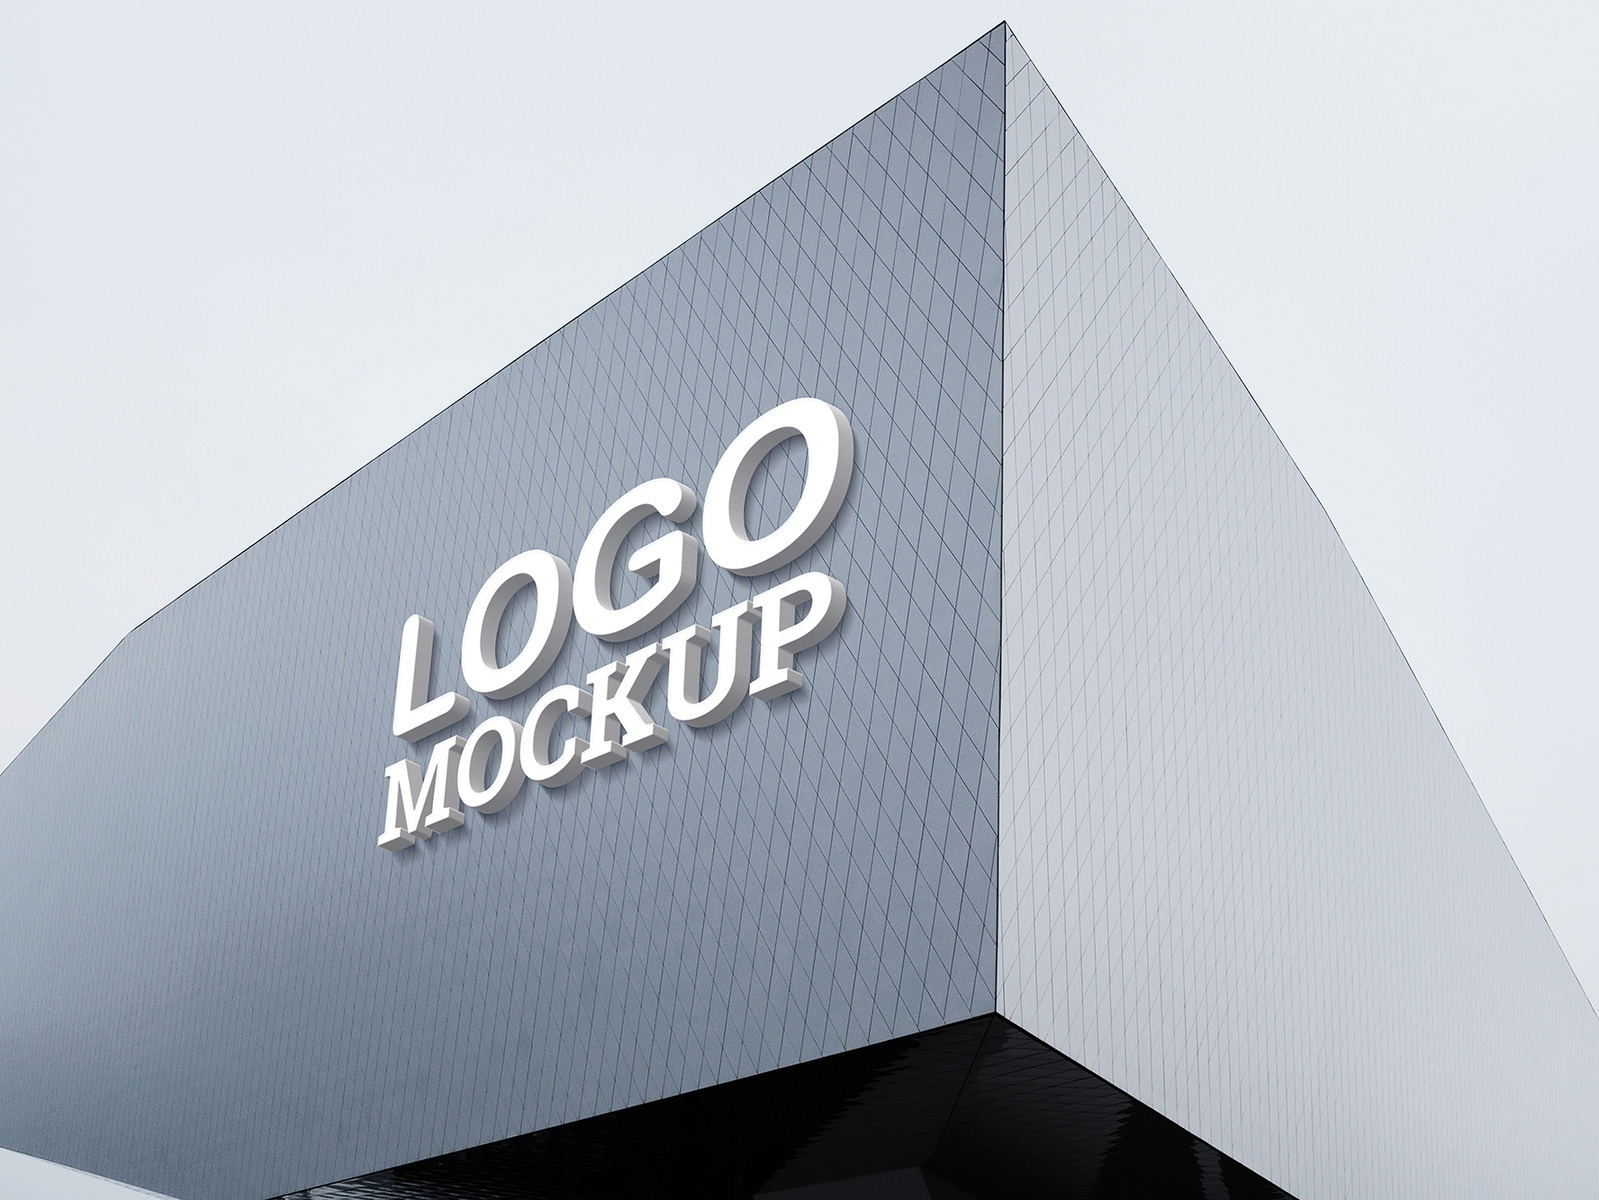 Download 3d logo mockup v3 - free psd by MockupHero on Dribbble